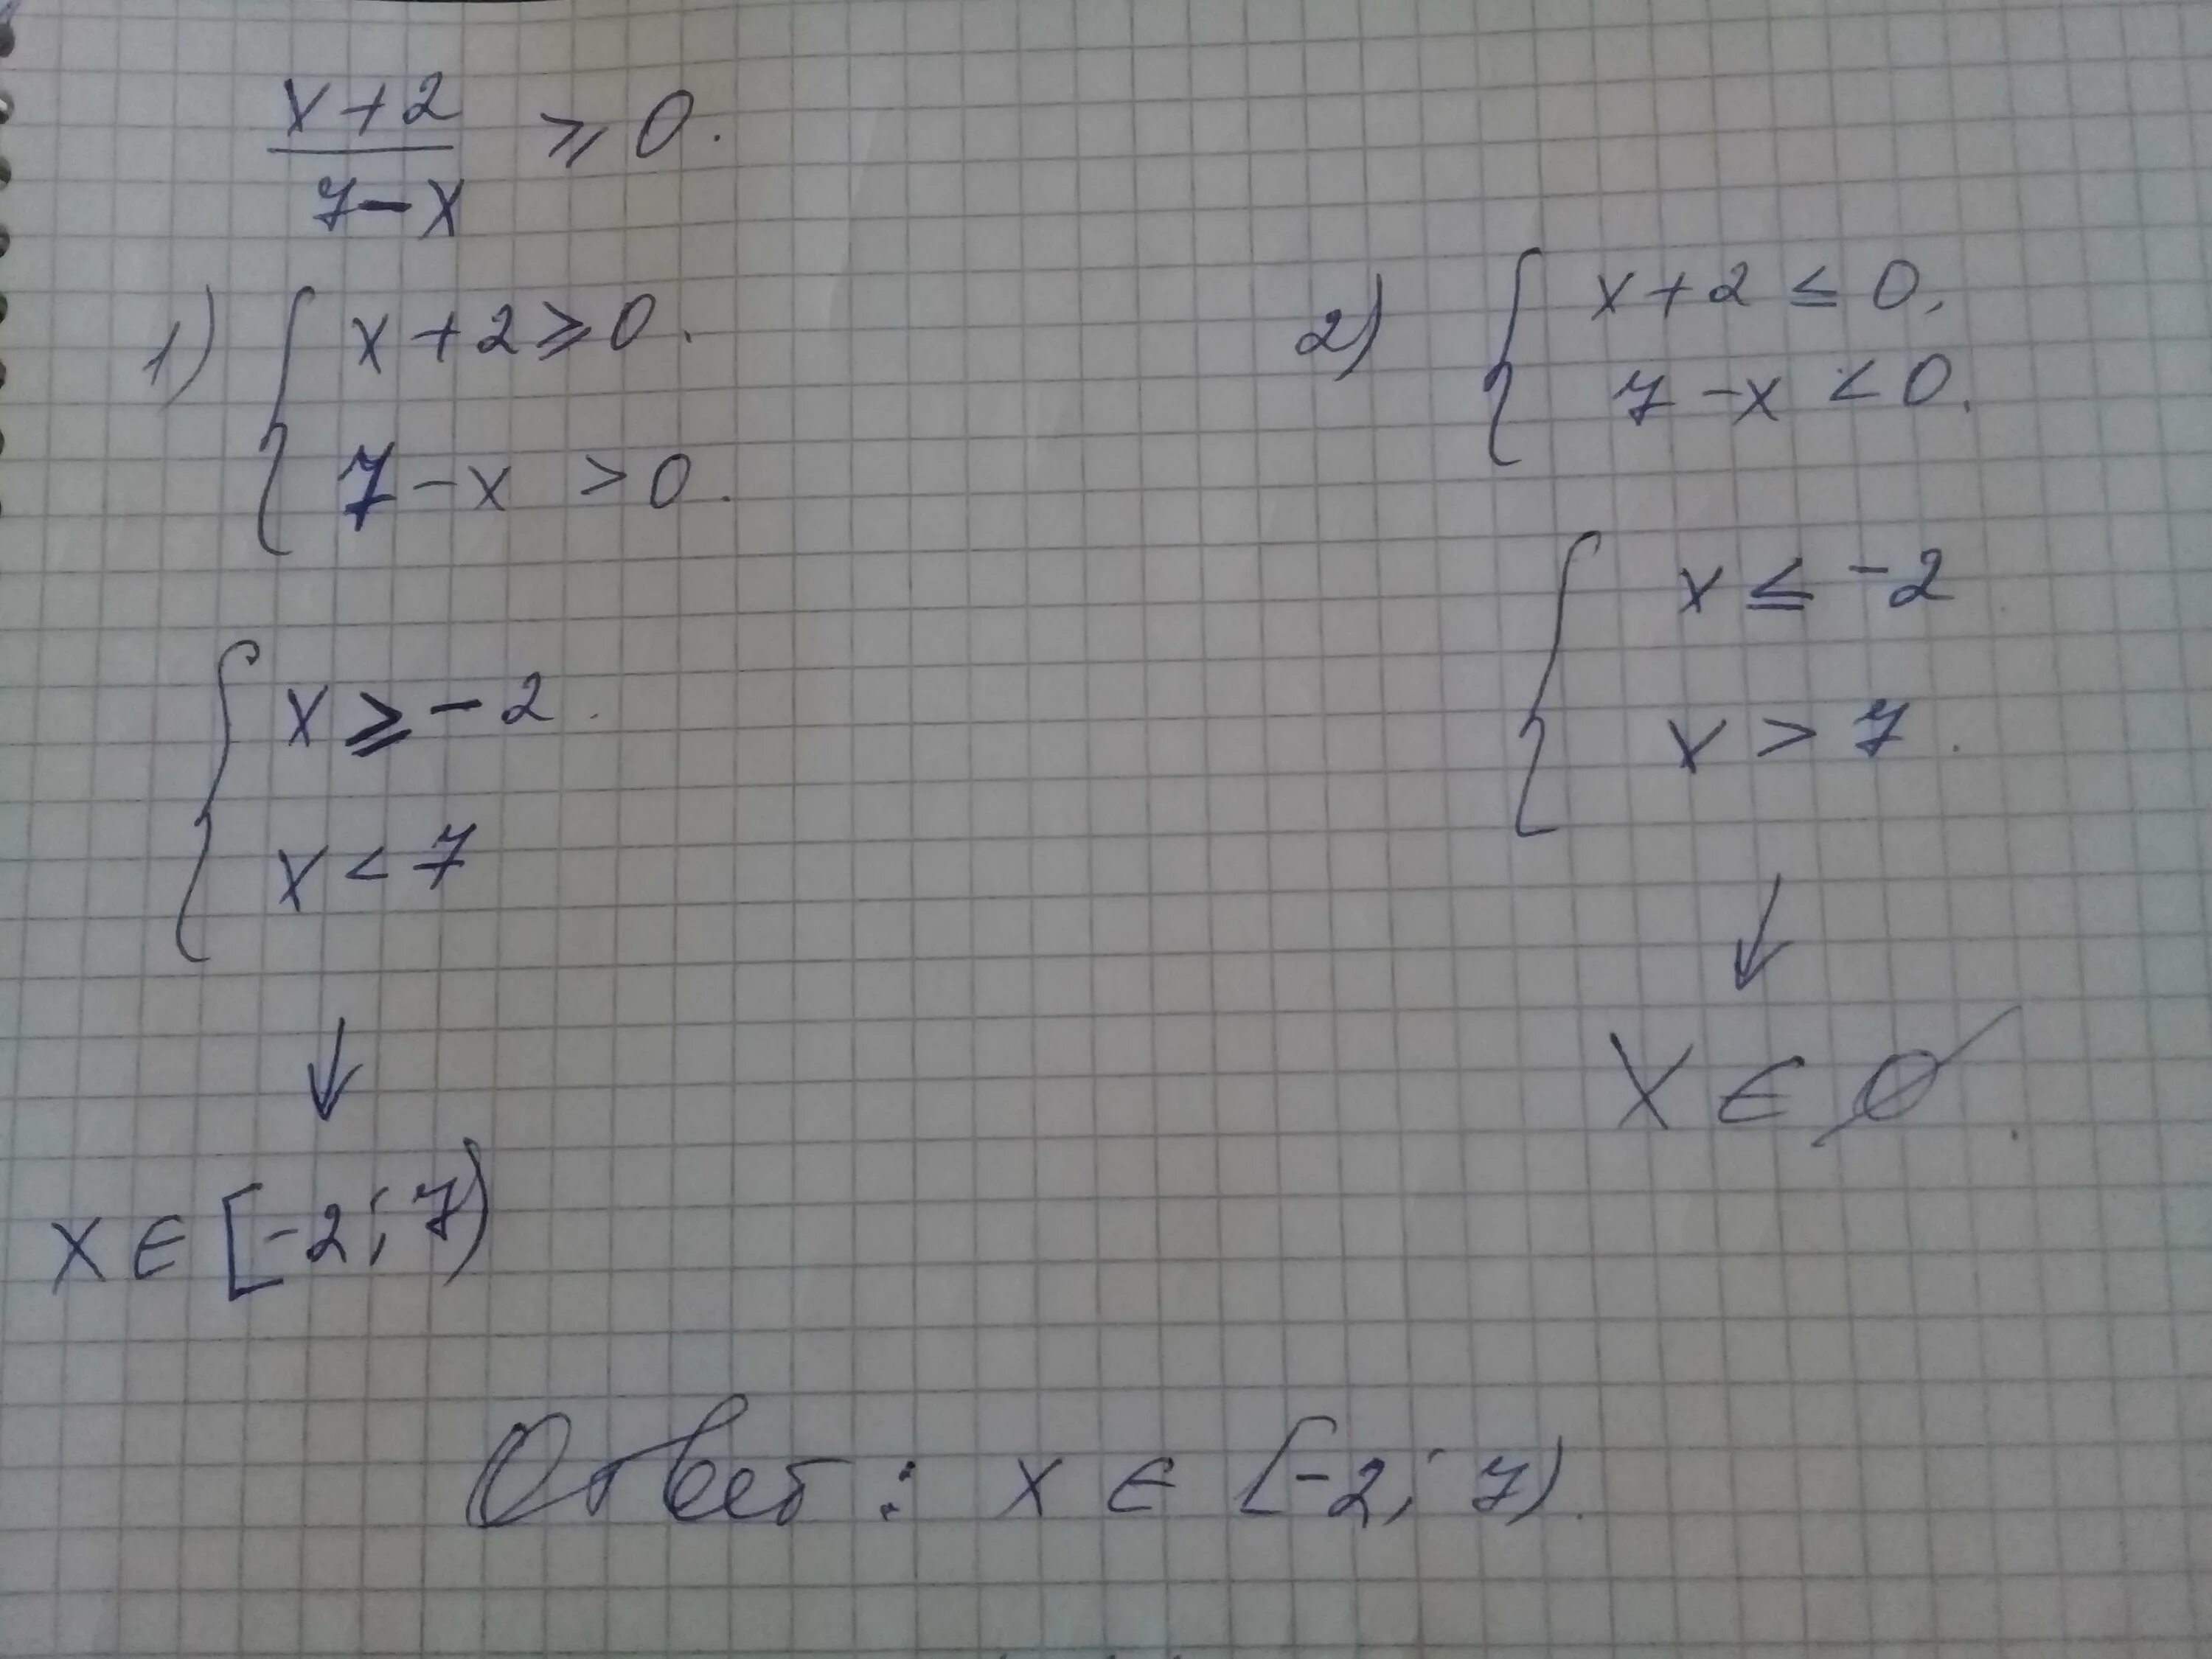 7x 4x 10 0. X 2 7x 10 больше или равно нулю. 7x-x2 больше или равно 0. X больше или равно 0. 7x-x2 больше 0.